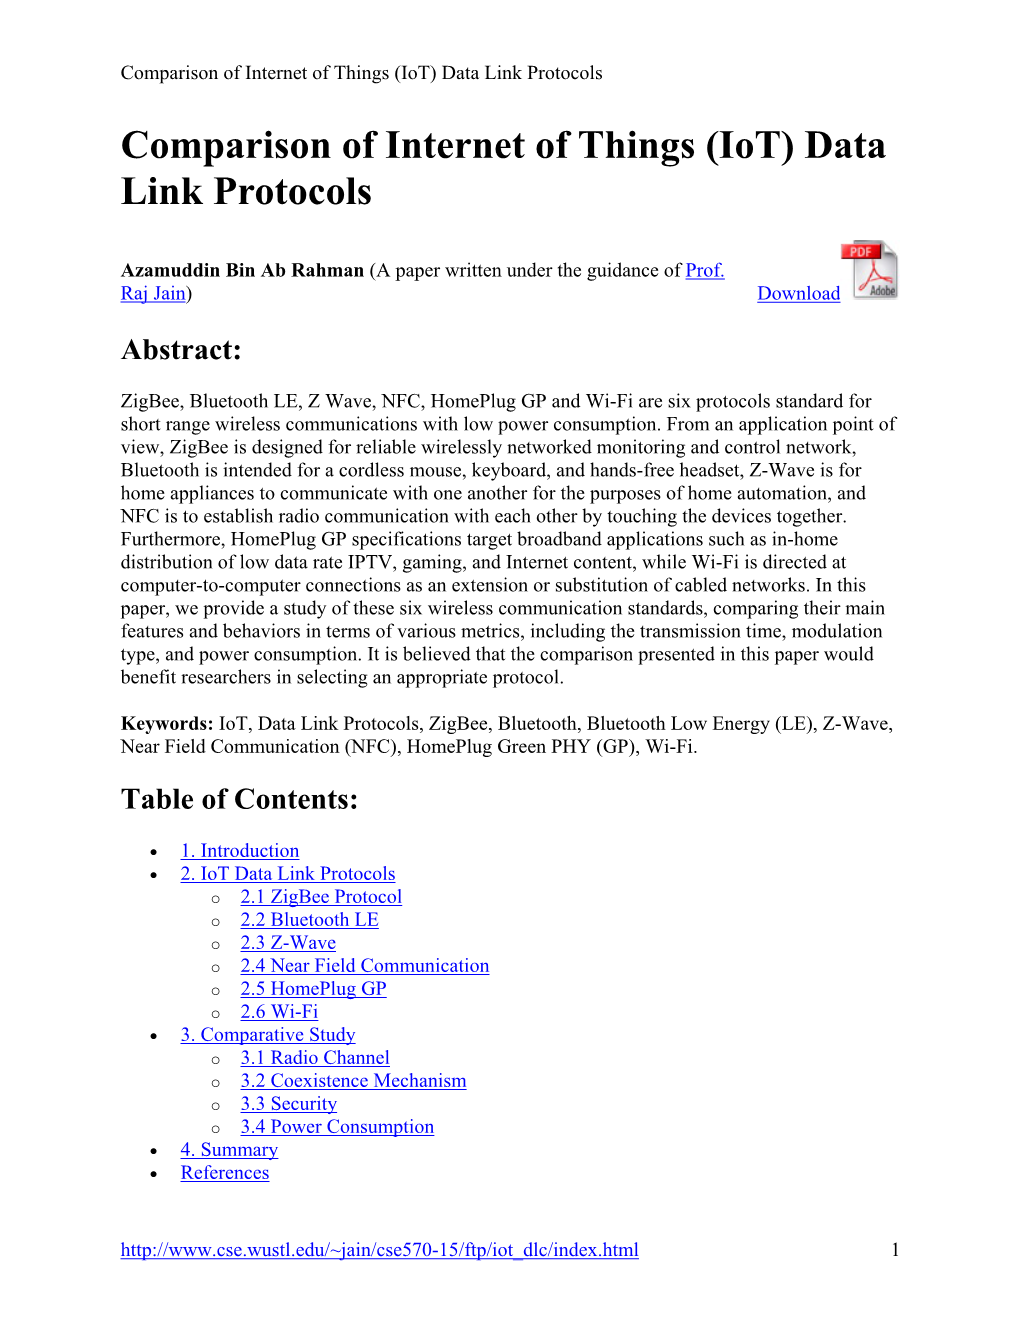 Iot) Data Link Protocols